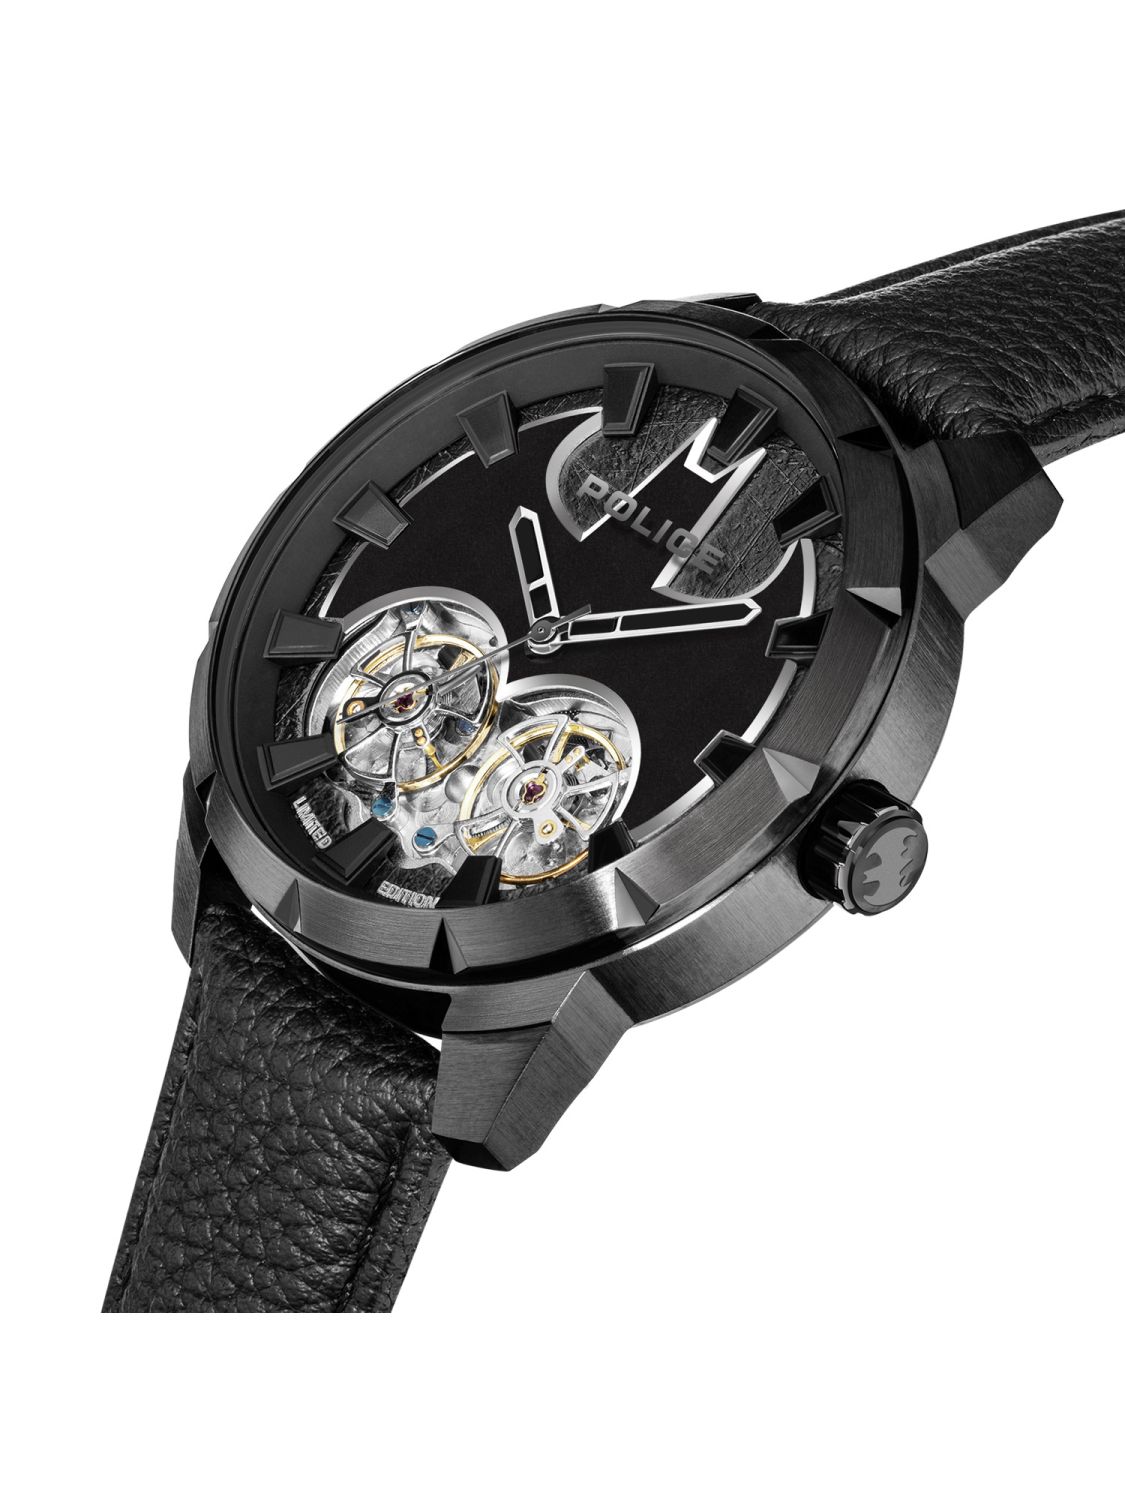 Limited uhrcenter Edition PEWGE0022701 Batman Police Black Wristwatch Automatic •